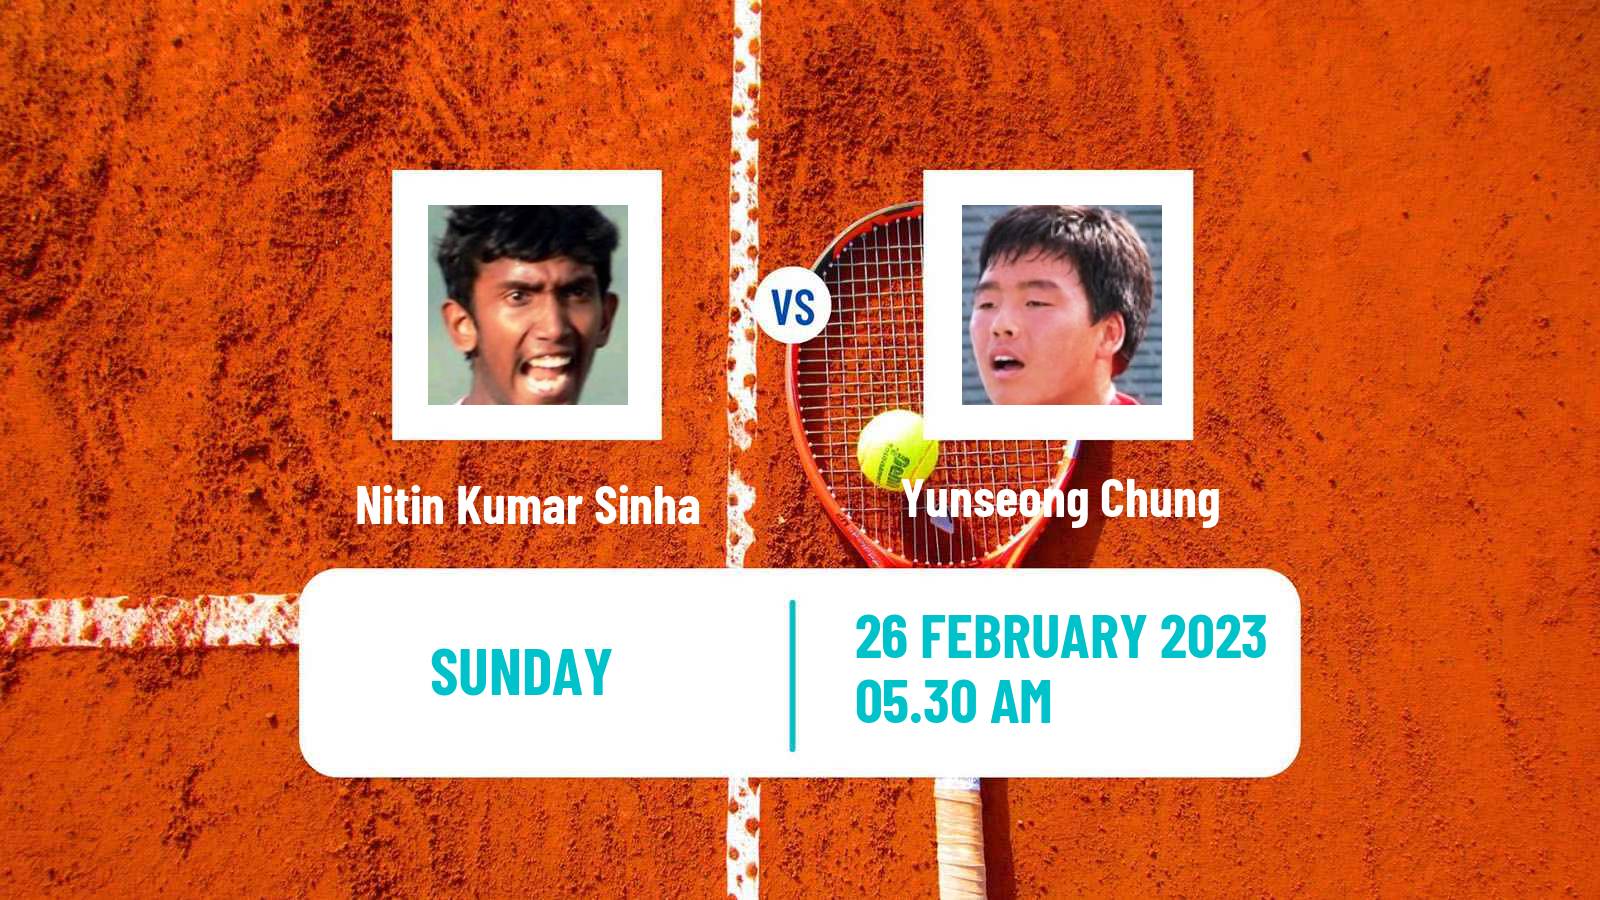 Tennis ATP Challenger Nitin Kumar Sinha - Yunseong Chung